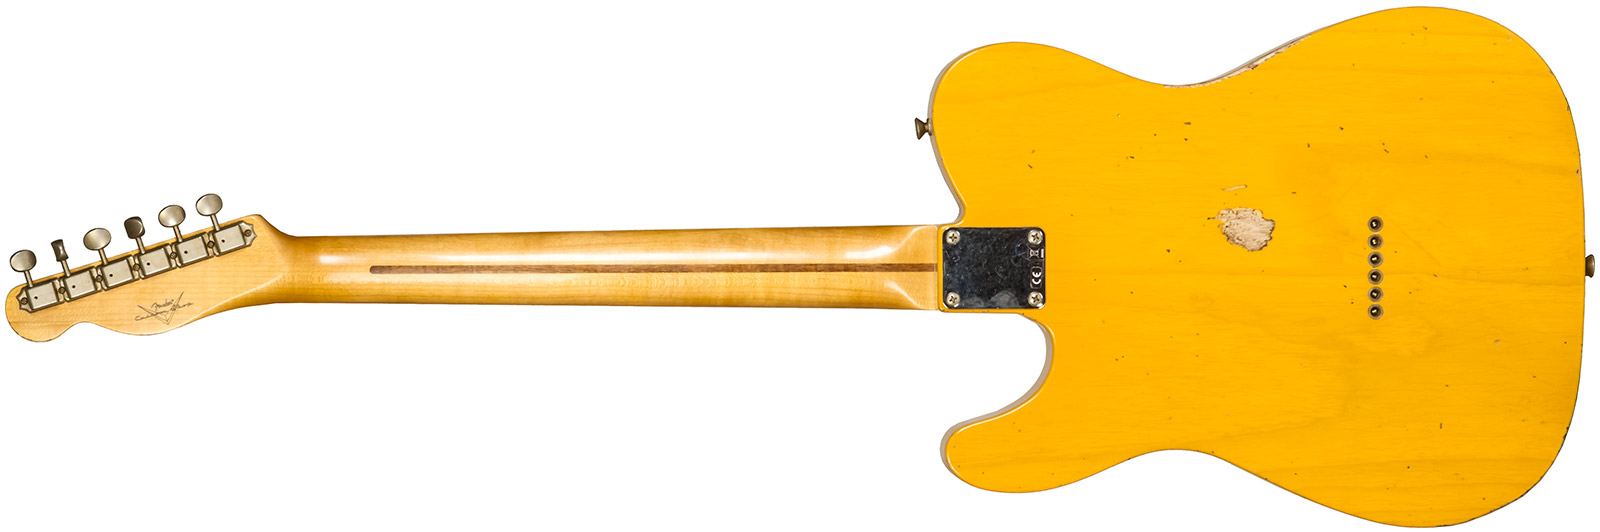 Fender Custom Shop Tele 1952 2s Ht Mn #r135090 - Relic Aged Butterscotch Blonde - Guitarra eléctrica con forma de tel - Variation 1